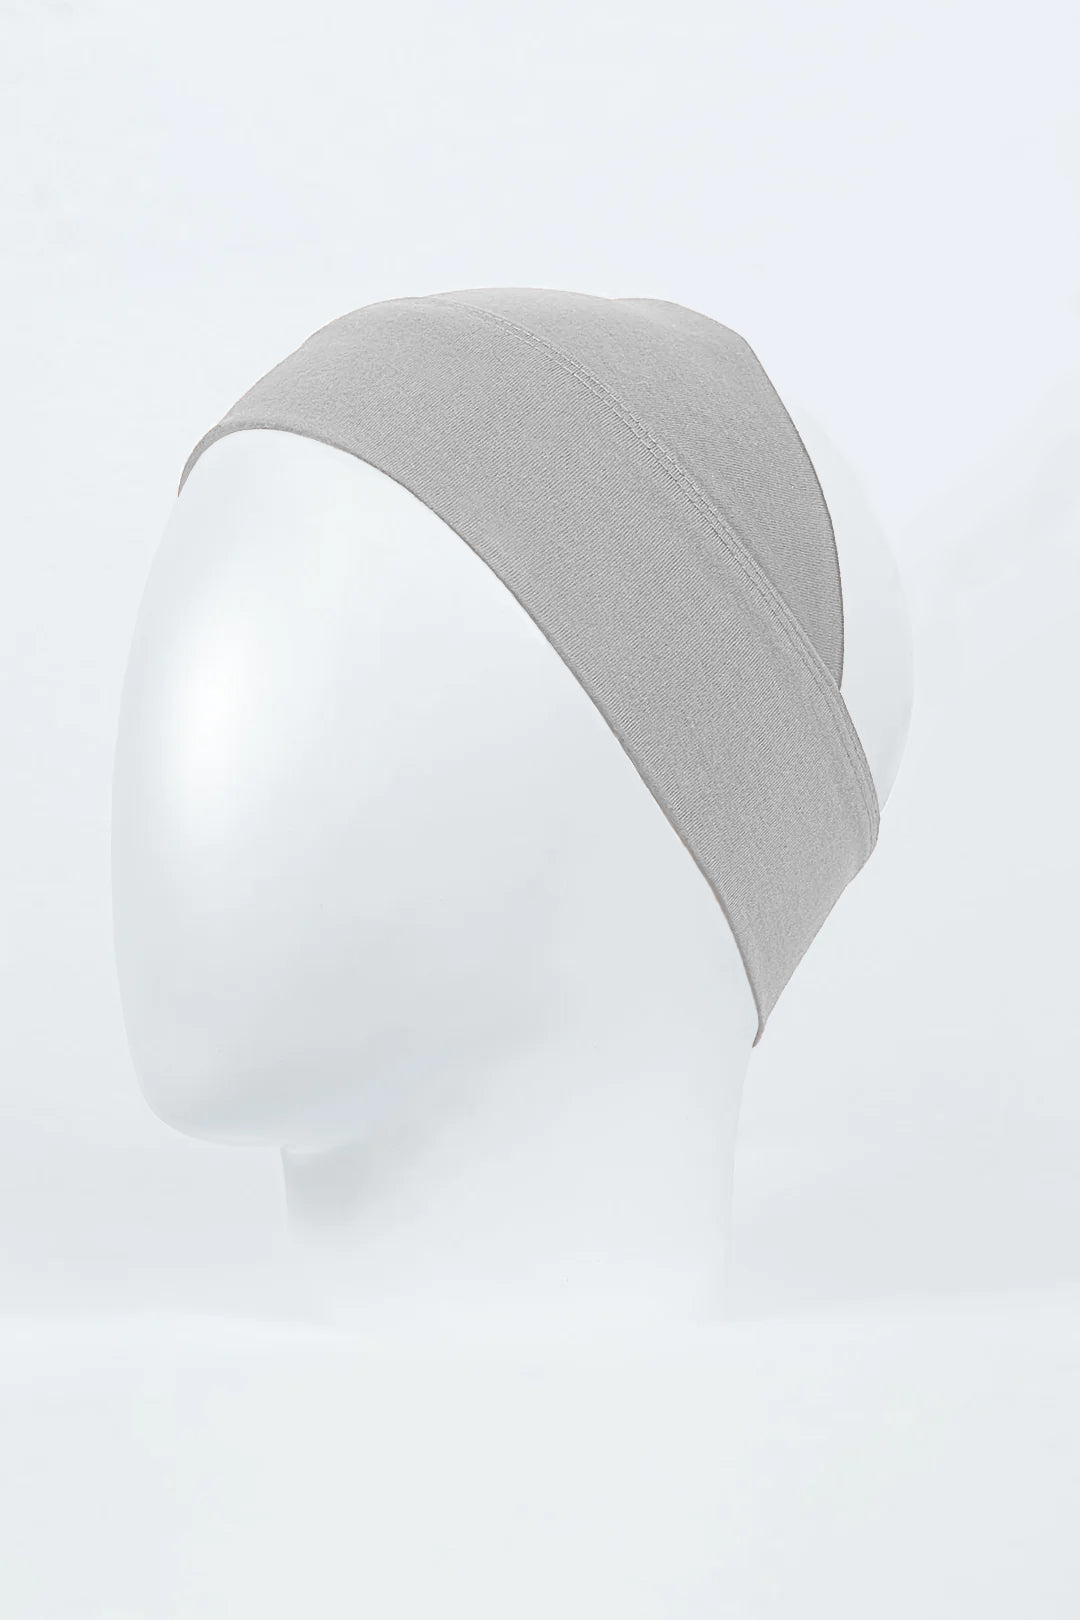 hijab cap in grey colour